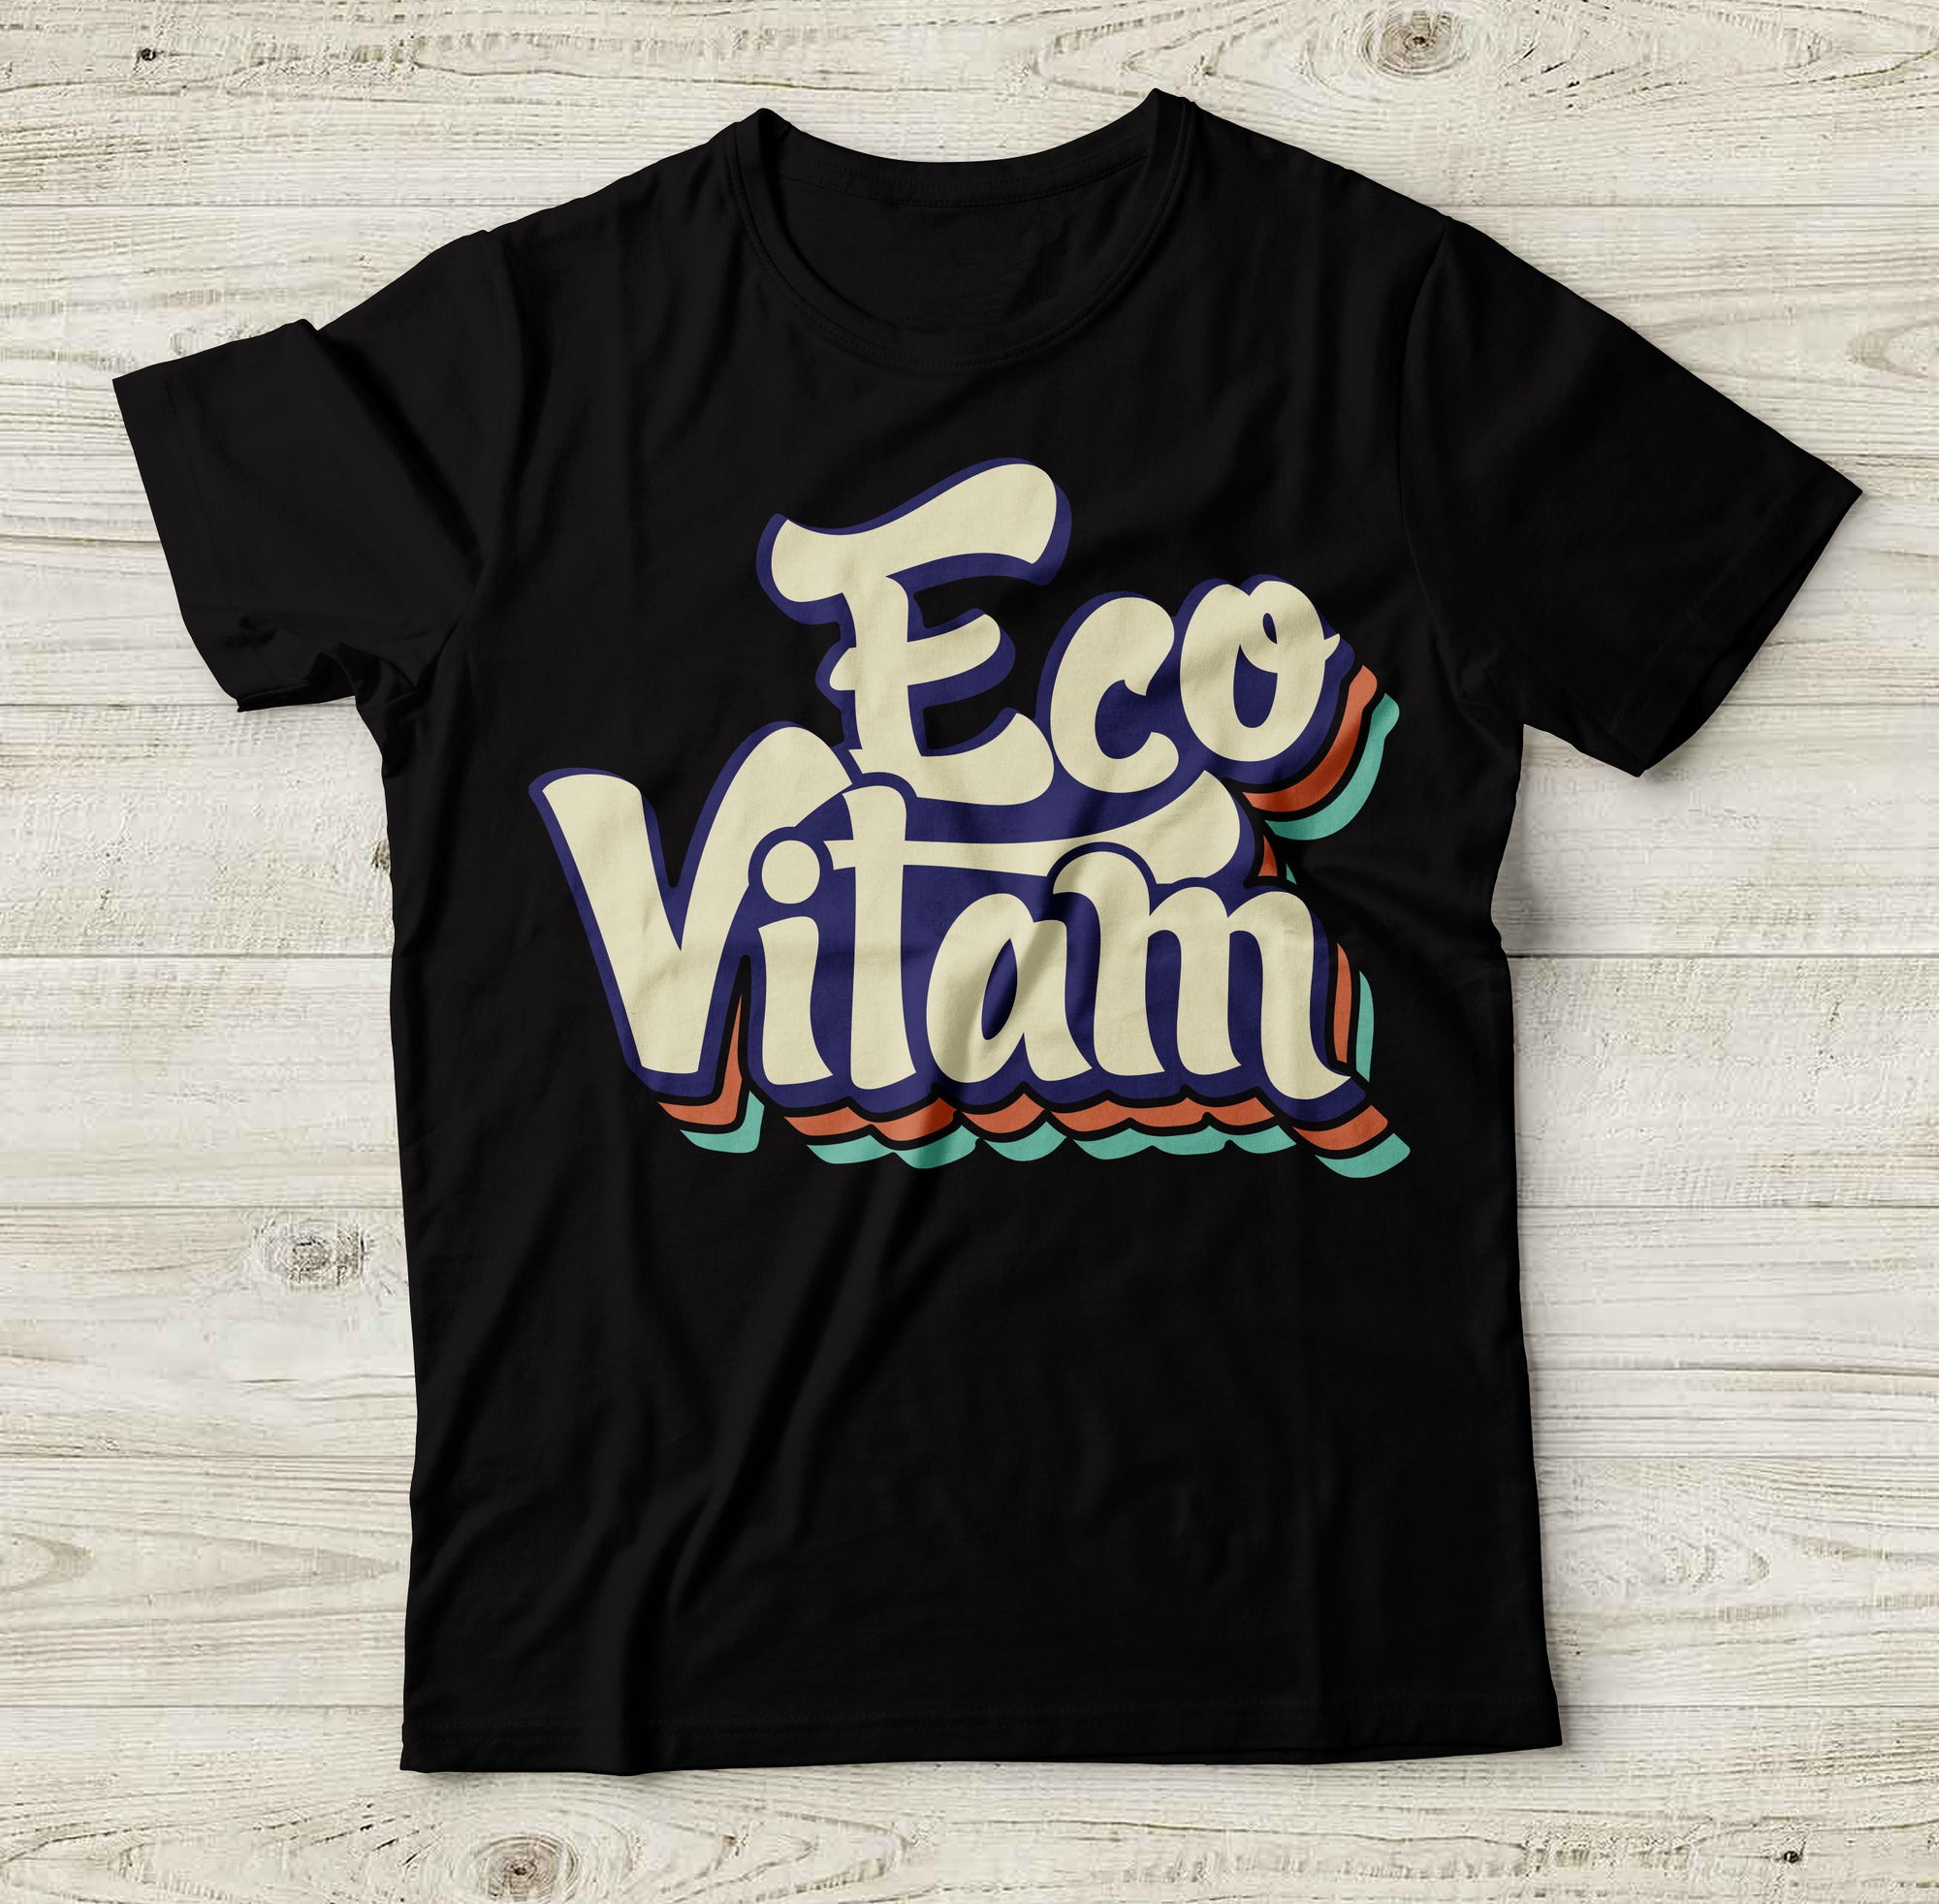 Eco Vitam